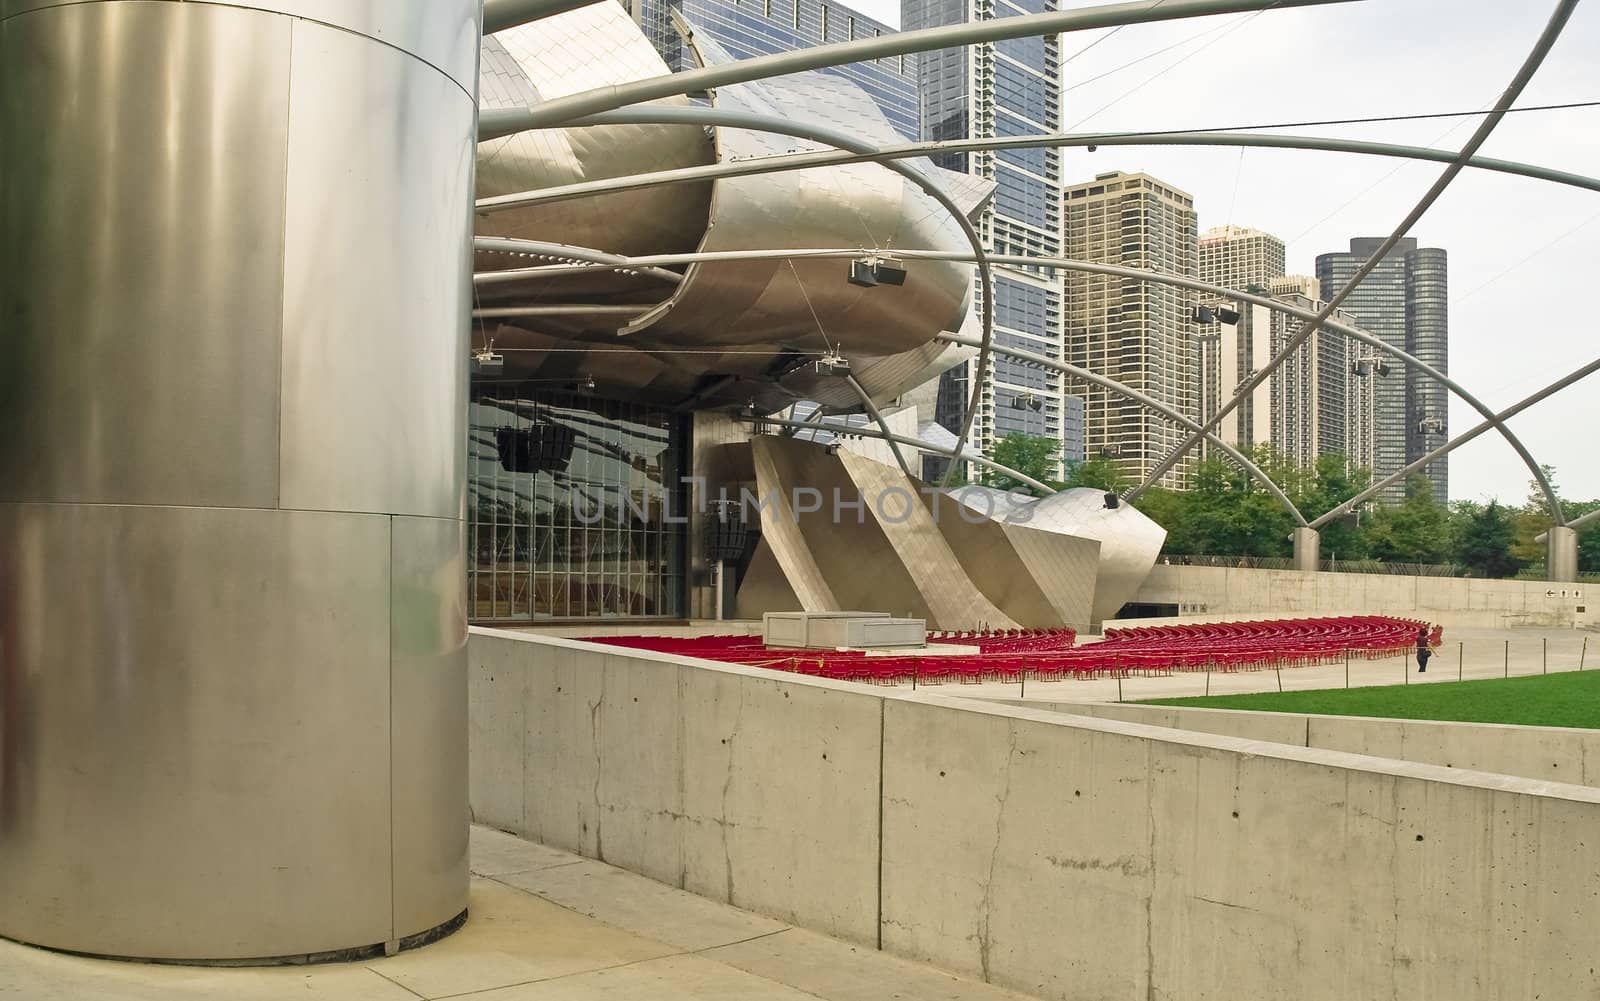 Millenium Park In Chicago Pavilion by Marcus